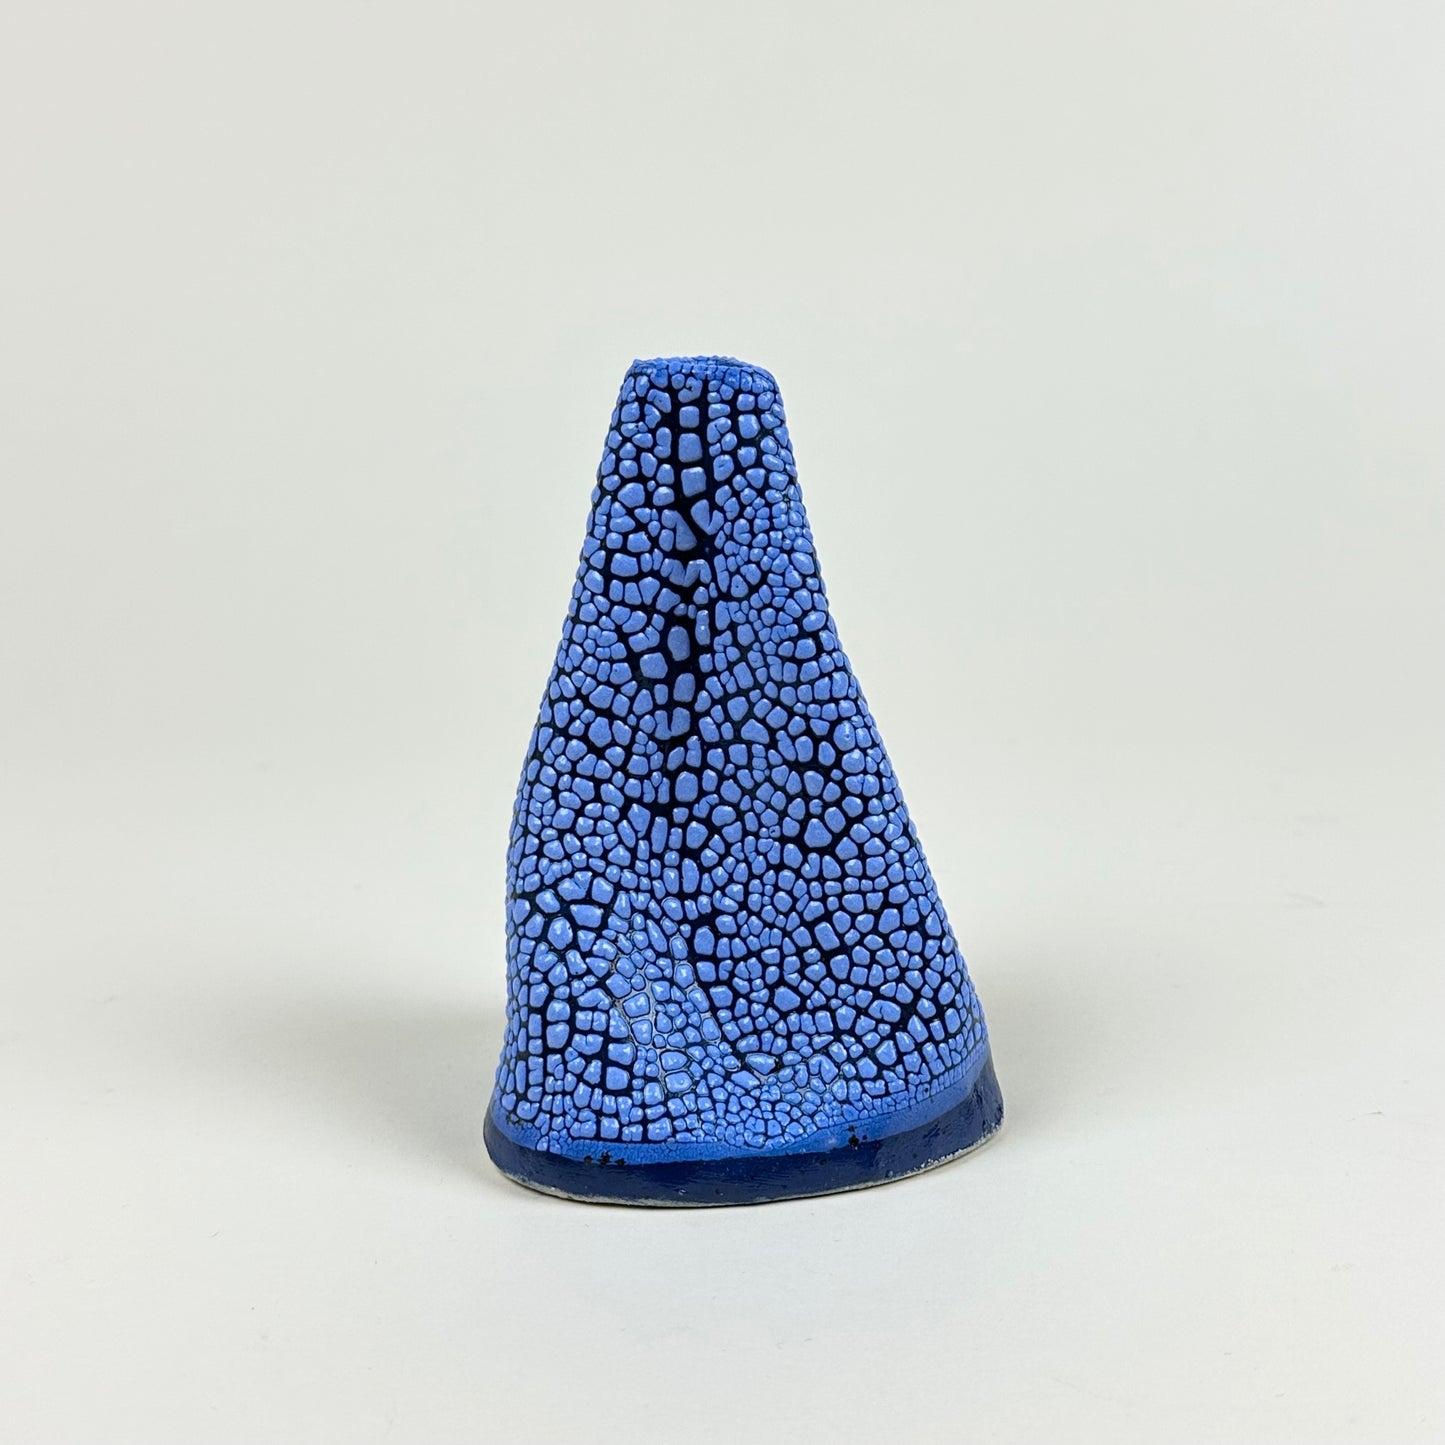 Blue volcano vase (L) by Astrid Öhman.